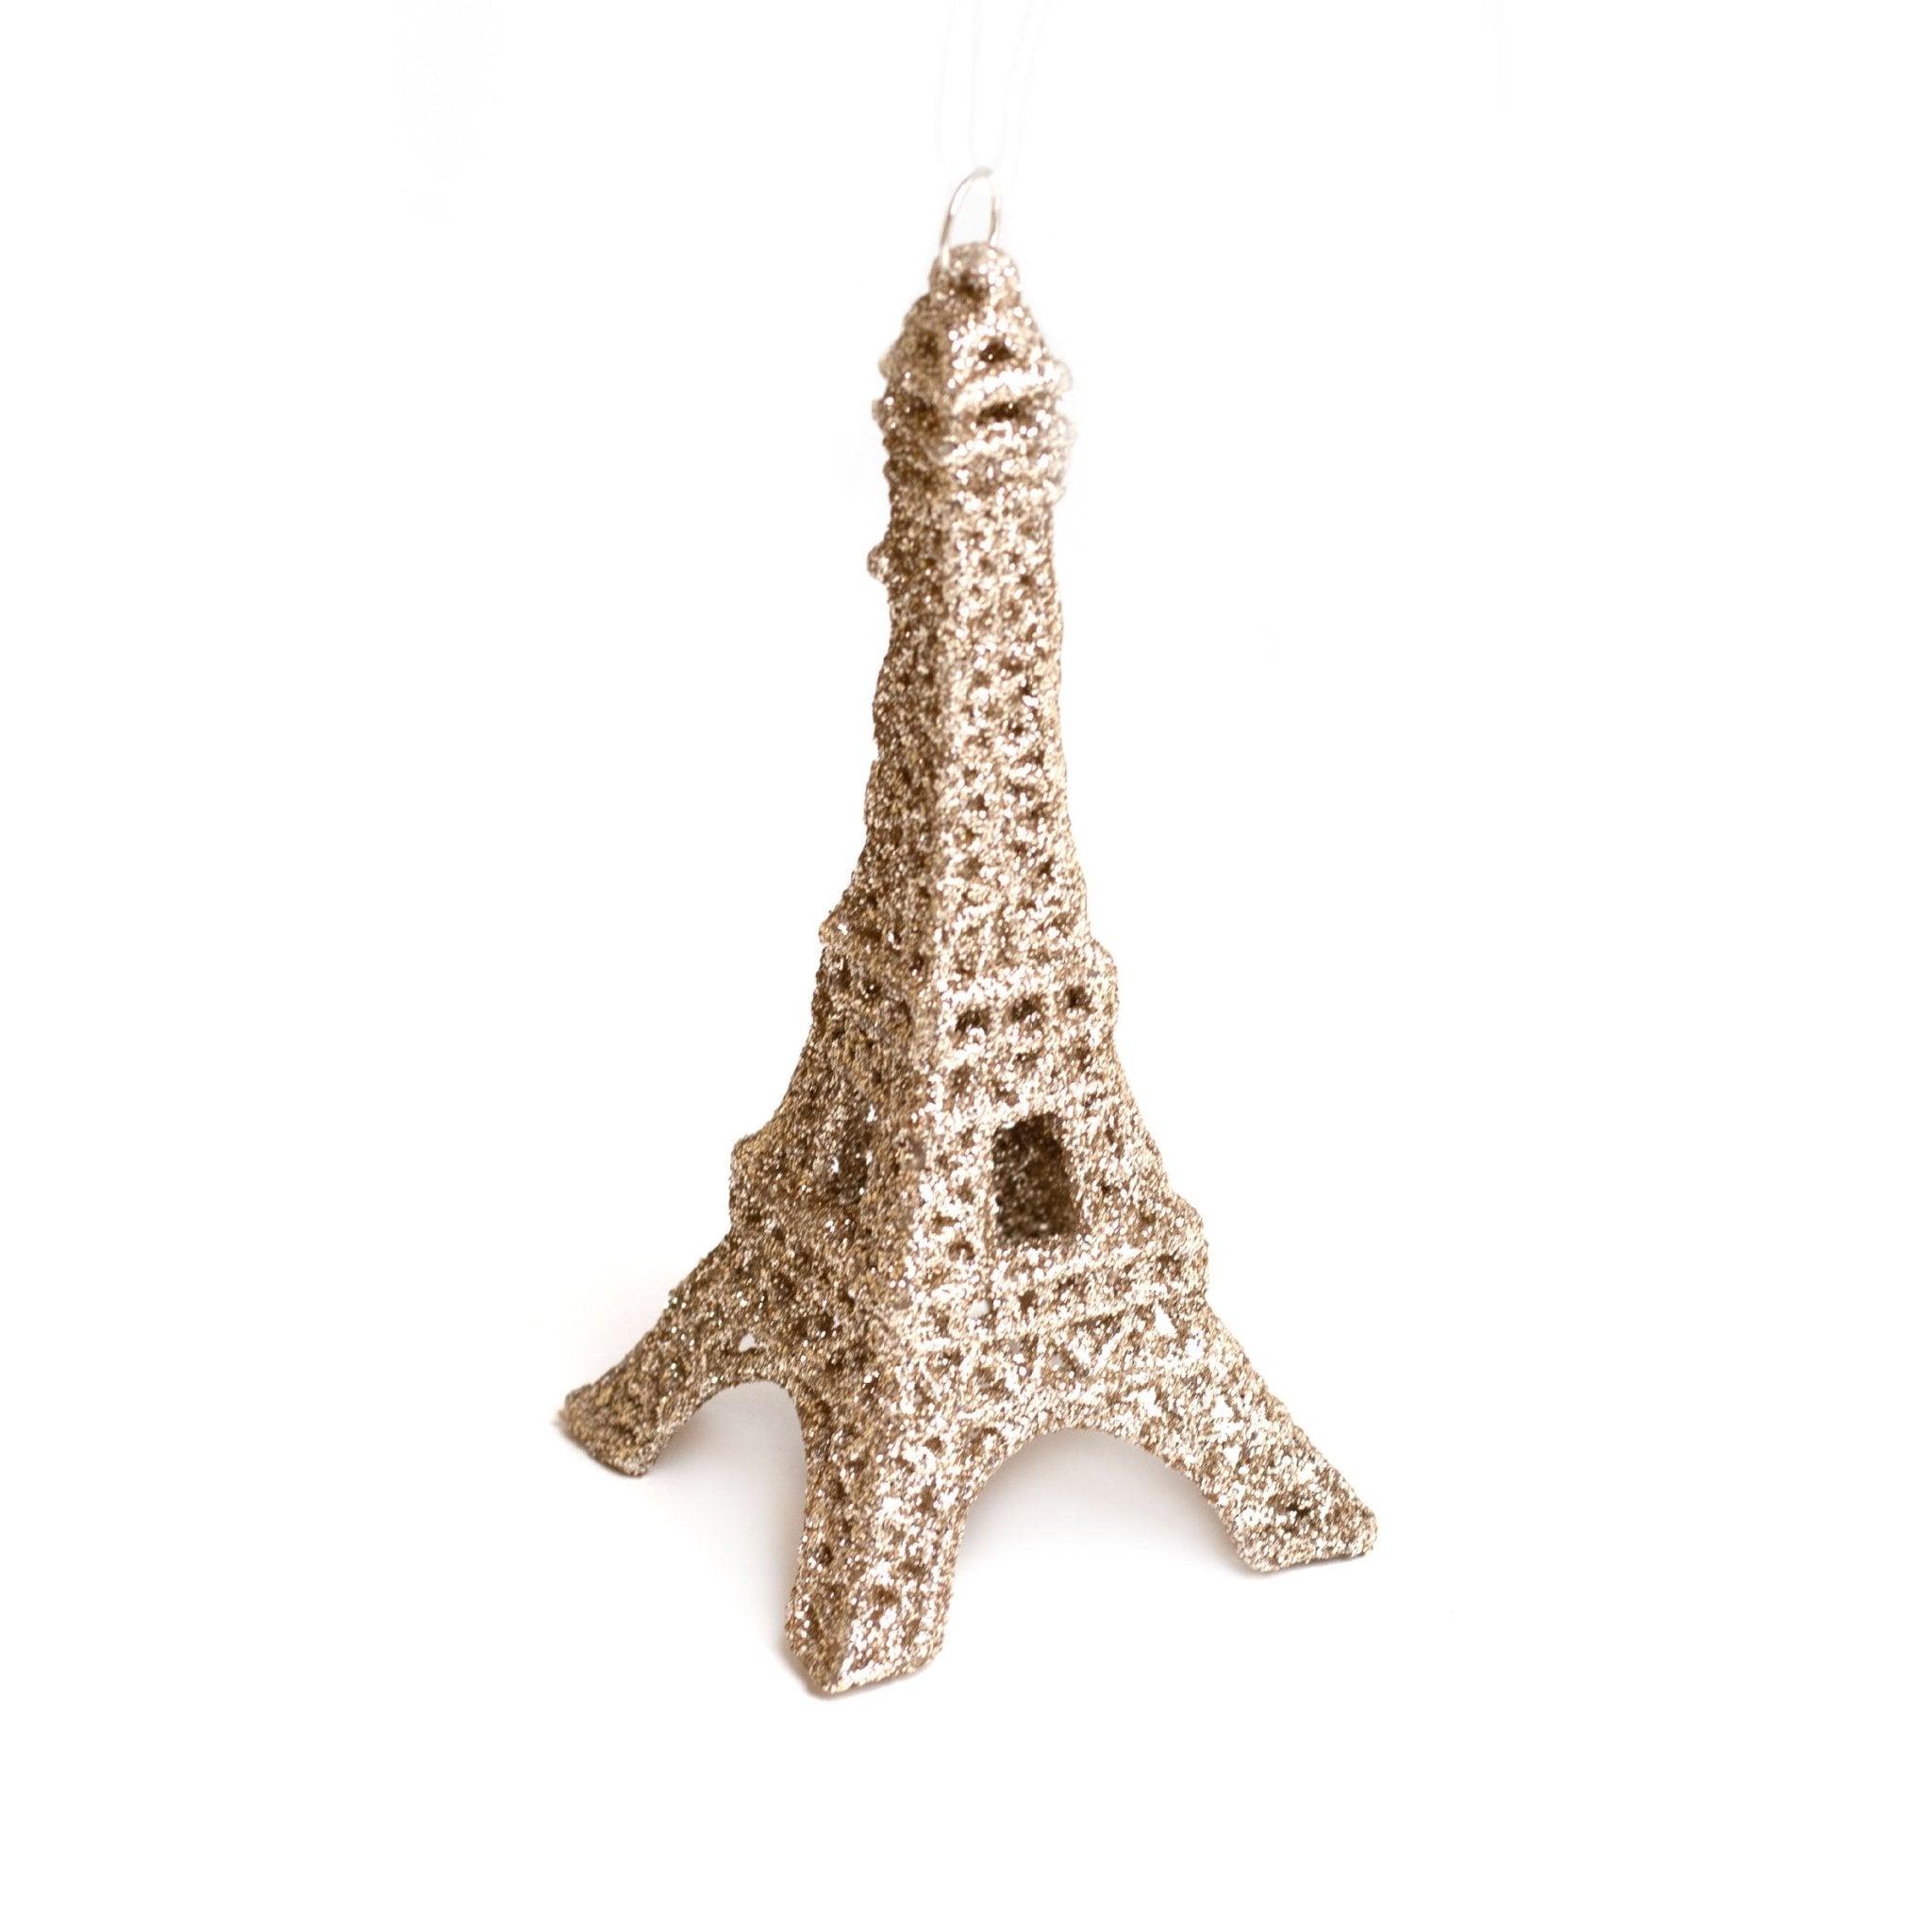 15cm Eiffel Tower Glittered Ornament 00501 - MODA FLORA Santa's Workshop